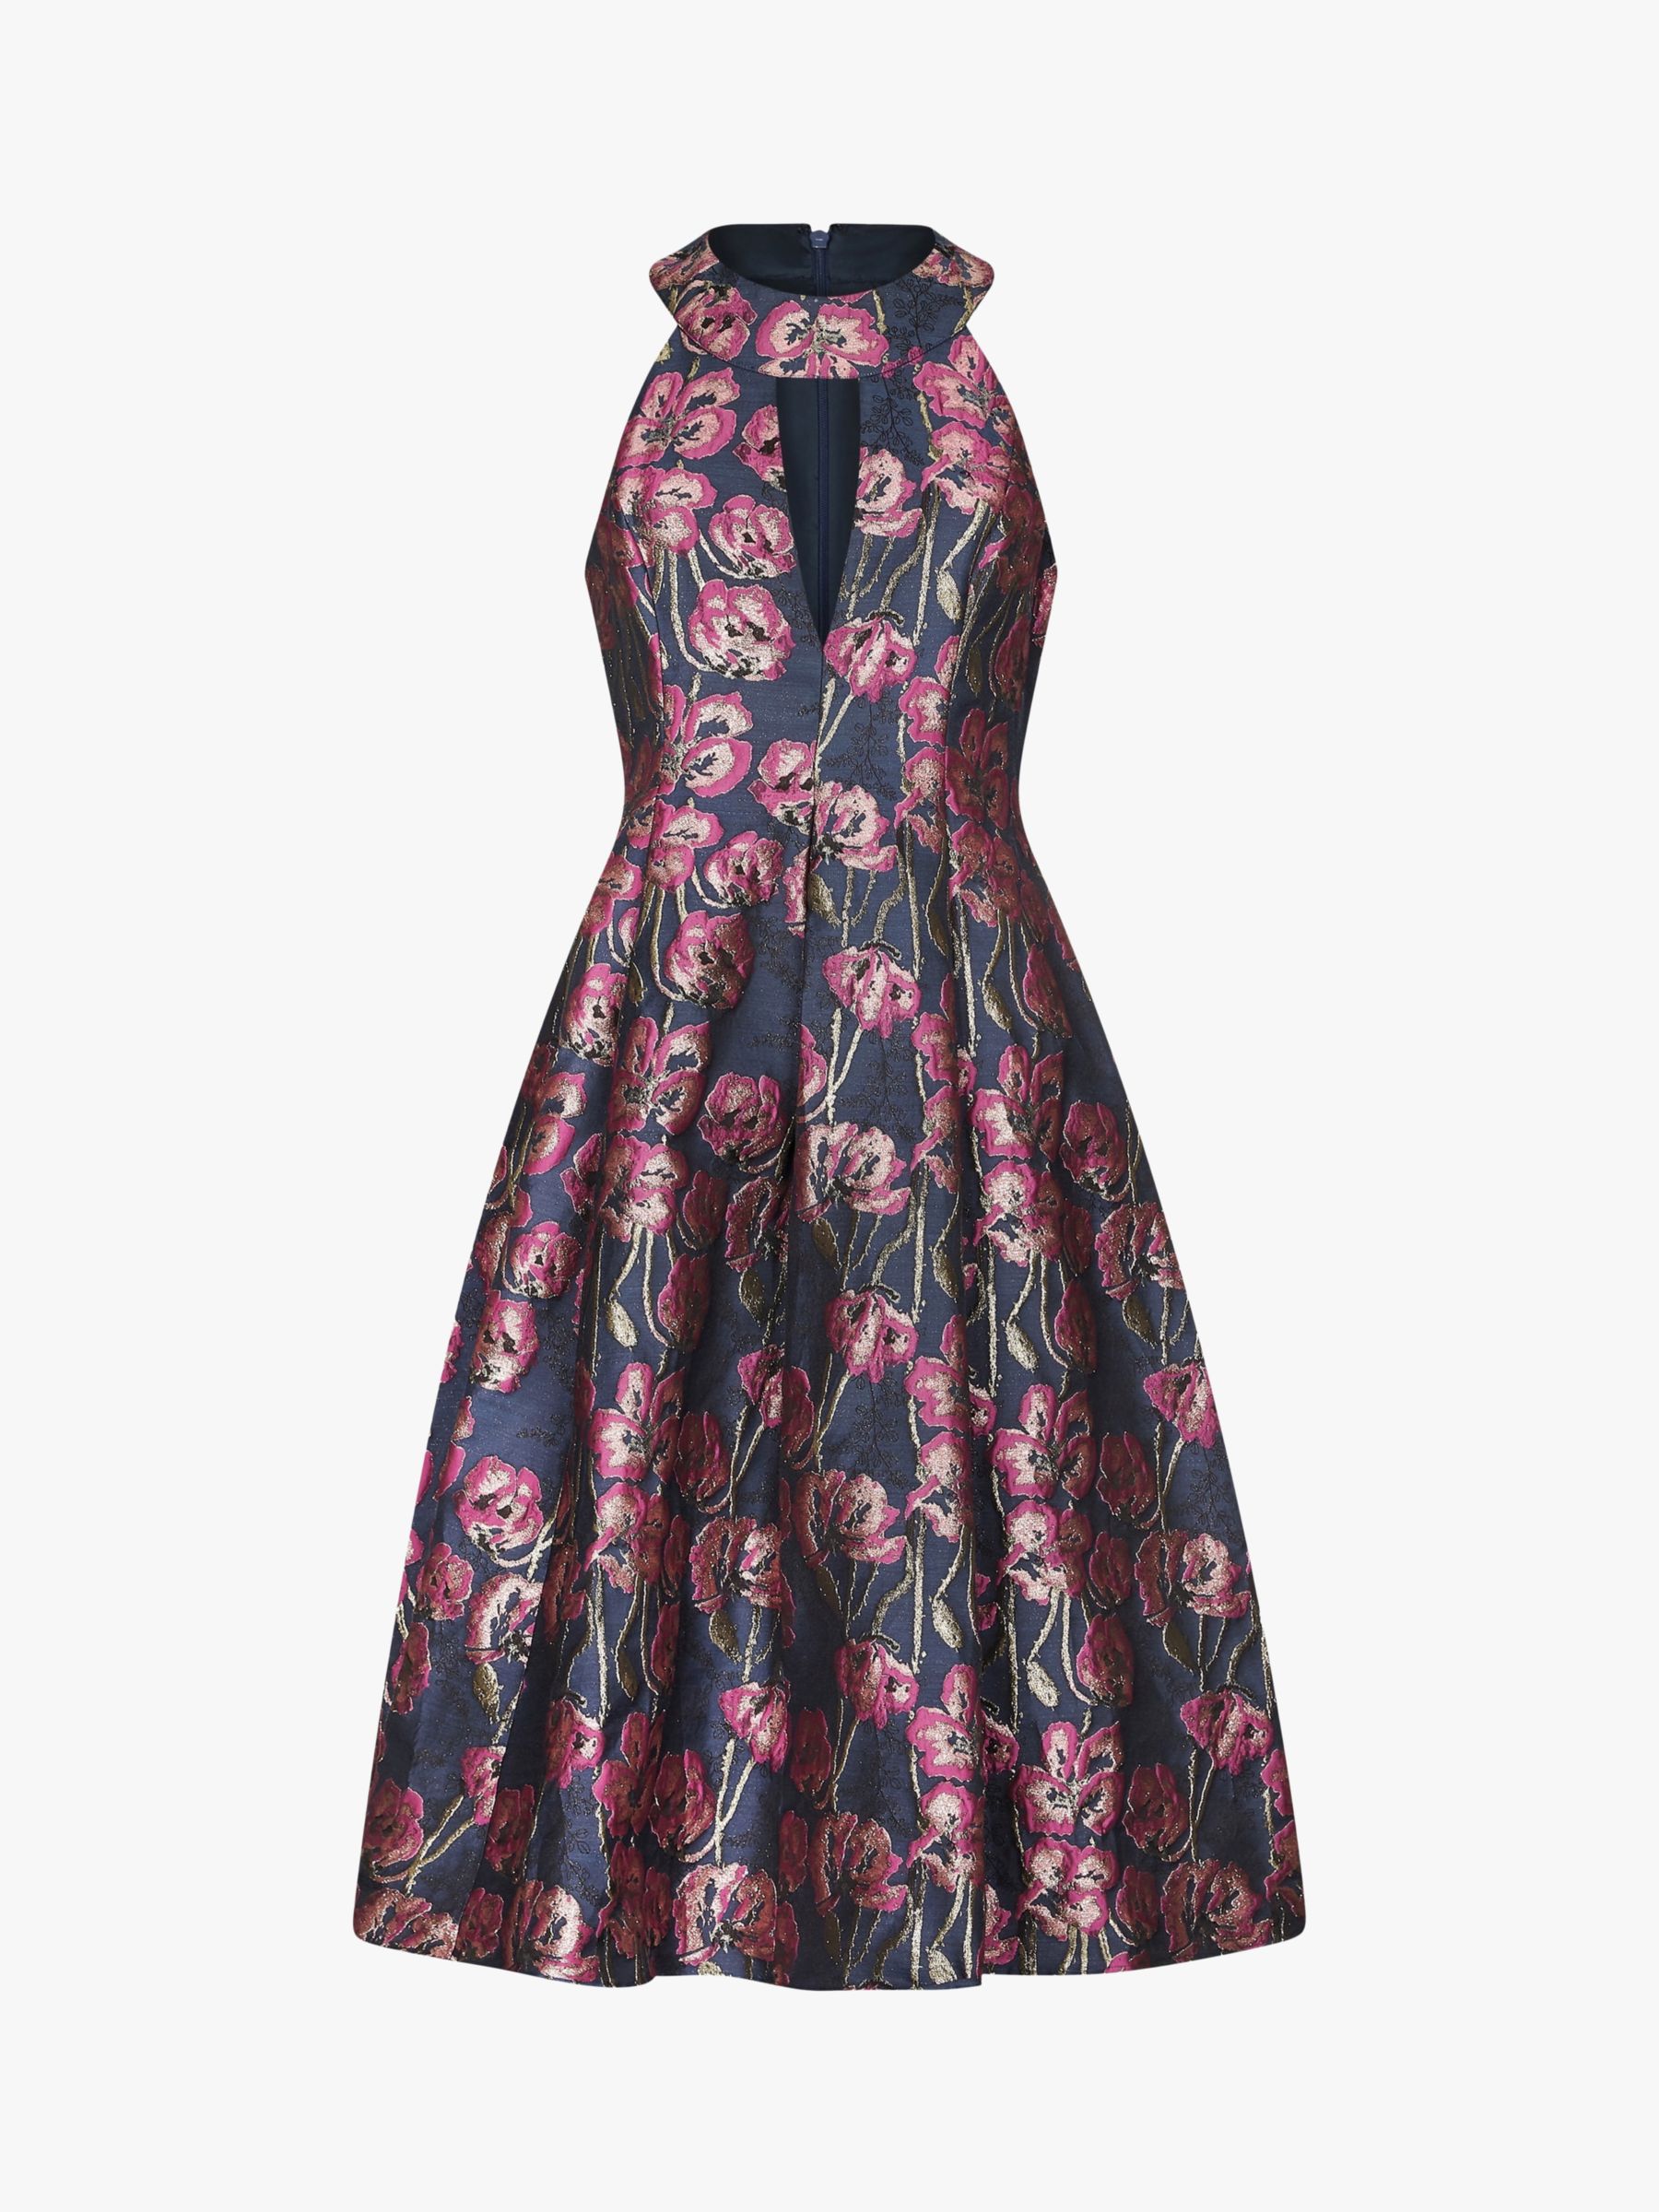 Adrianna Papell Floral Print Jacquard Dress, Fuschia/Multi